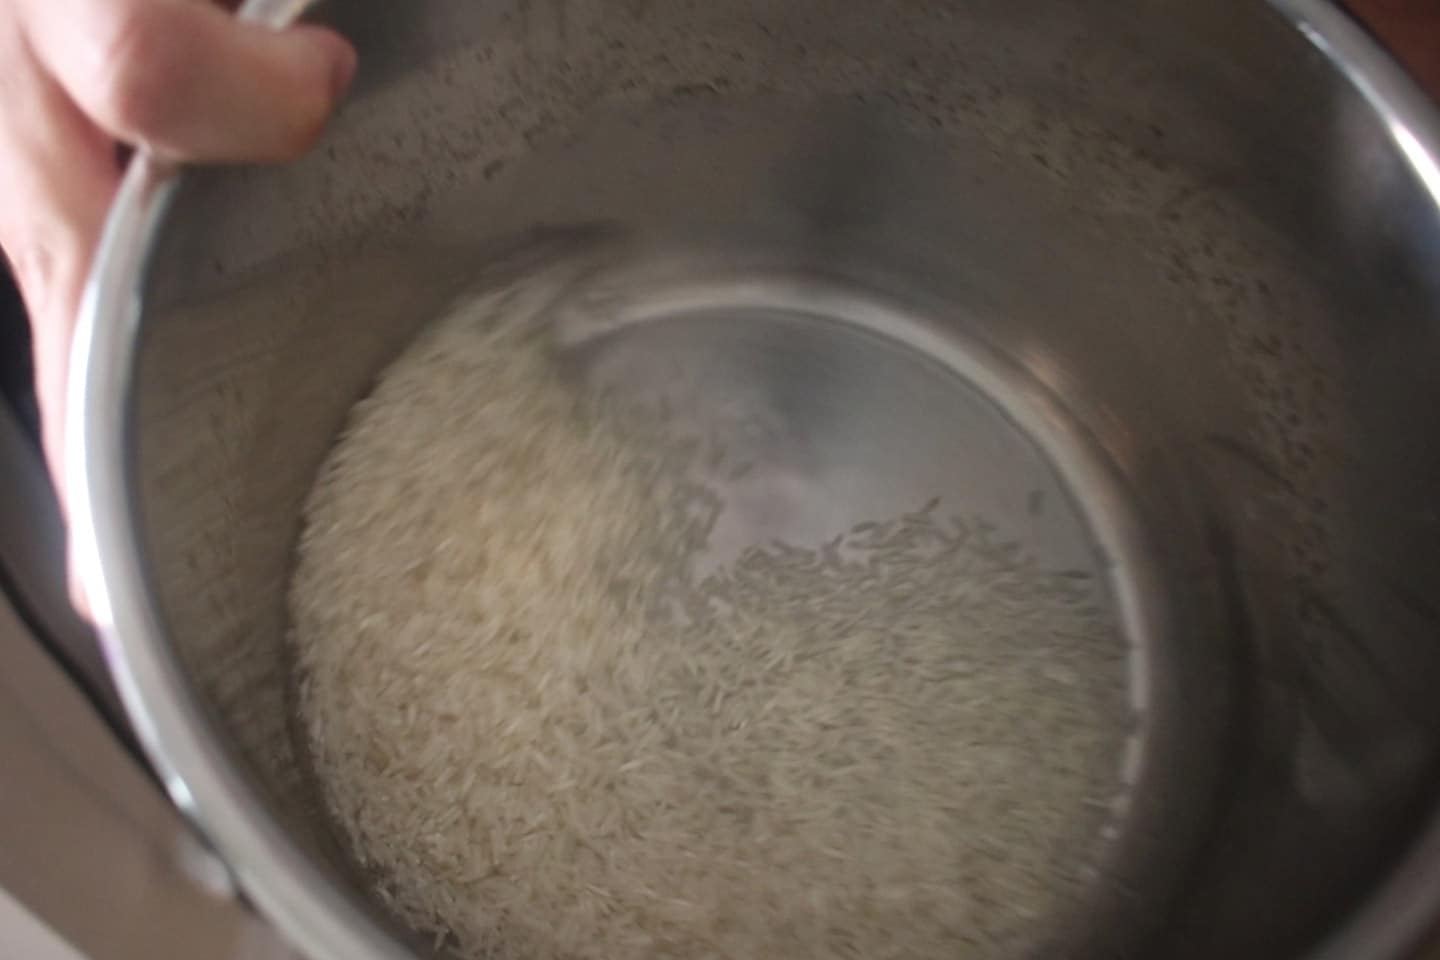 swirling rice in an instant pot inner pot